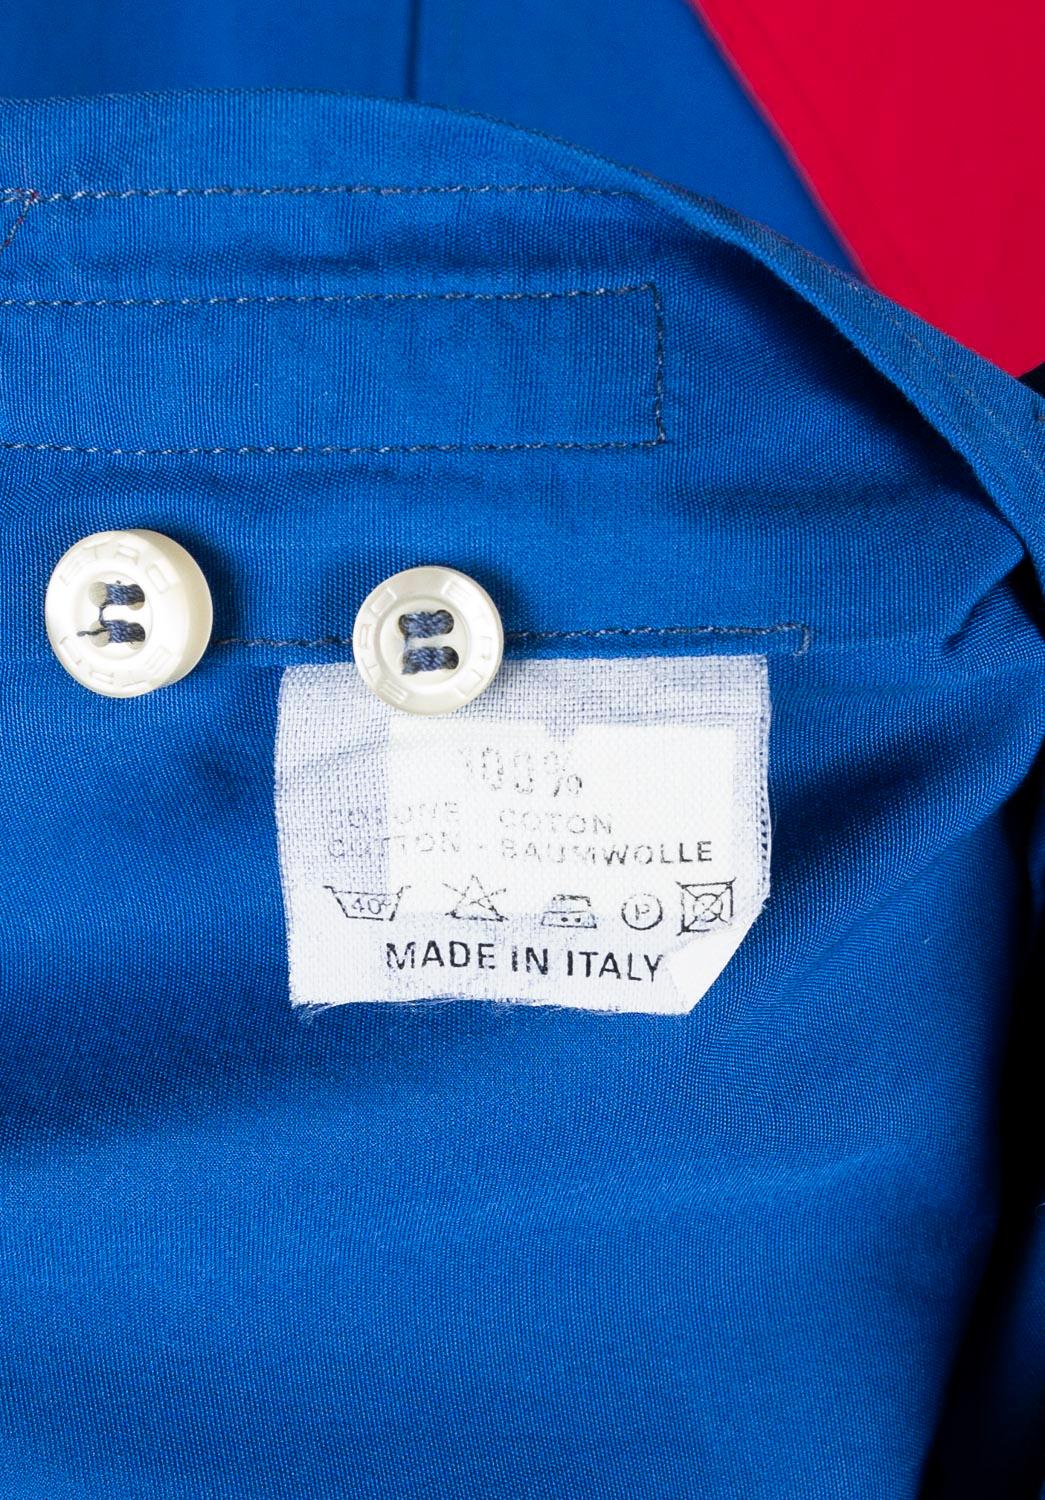 Etro Men Men Slim Fit Shirt Size Medium, S463 For Sale 3